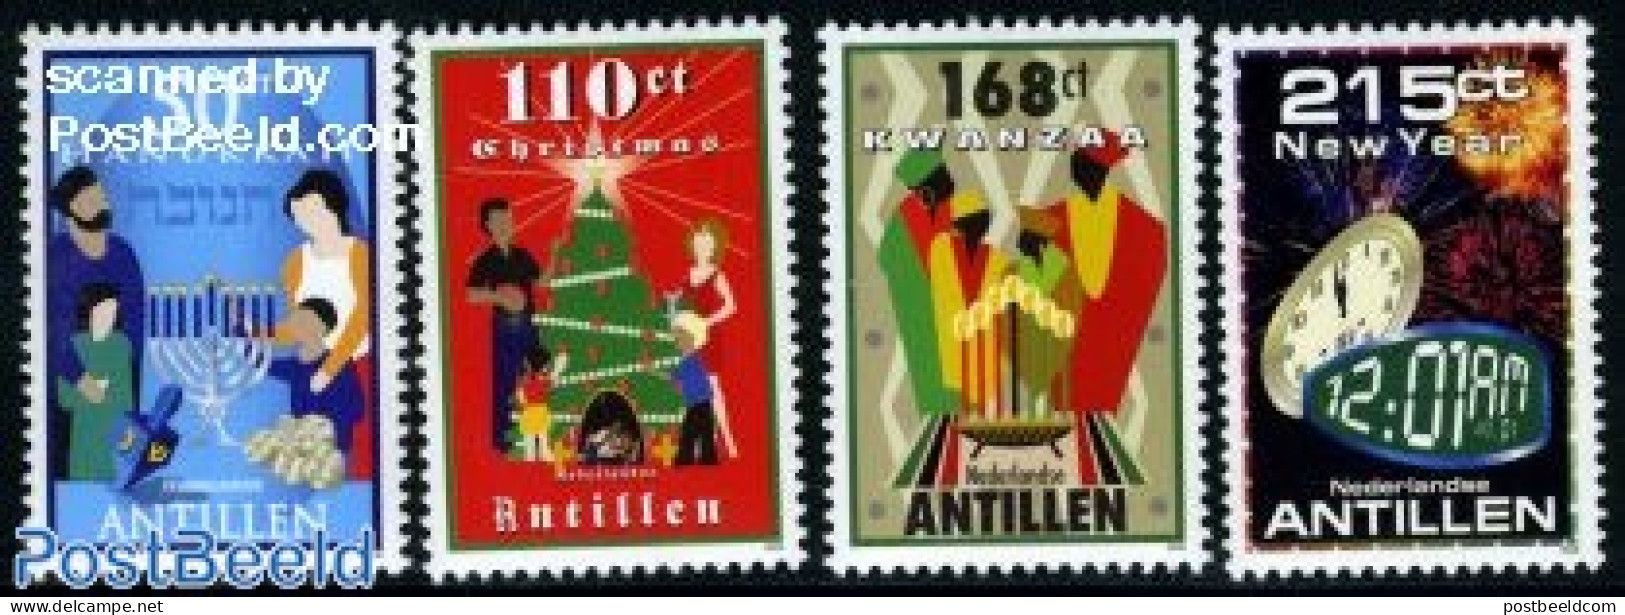 Netherlands Antilles 2009 December Stamps 4v, Mint NH, Religion - Various - Christmas - Judaica - New Year - Art - Clo.. - Weihnachten